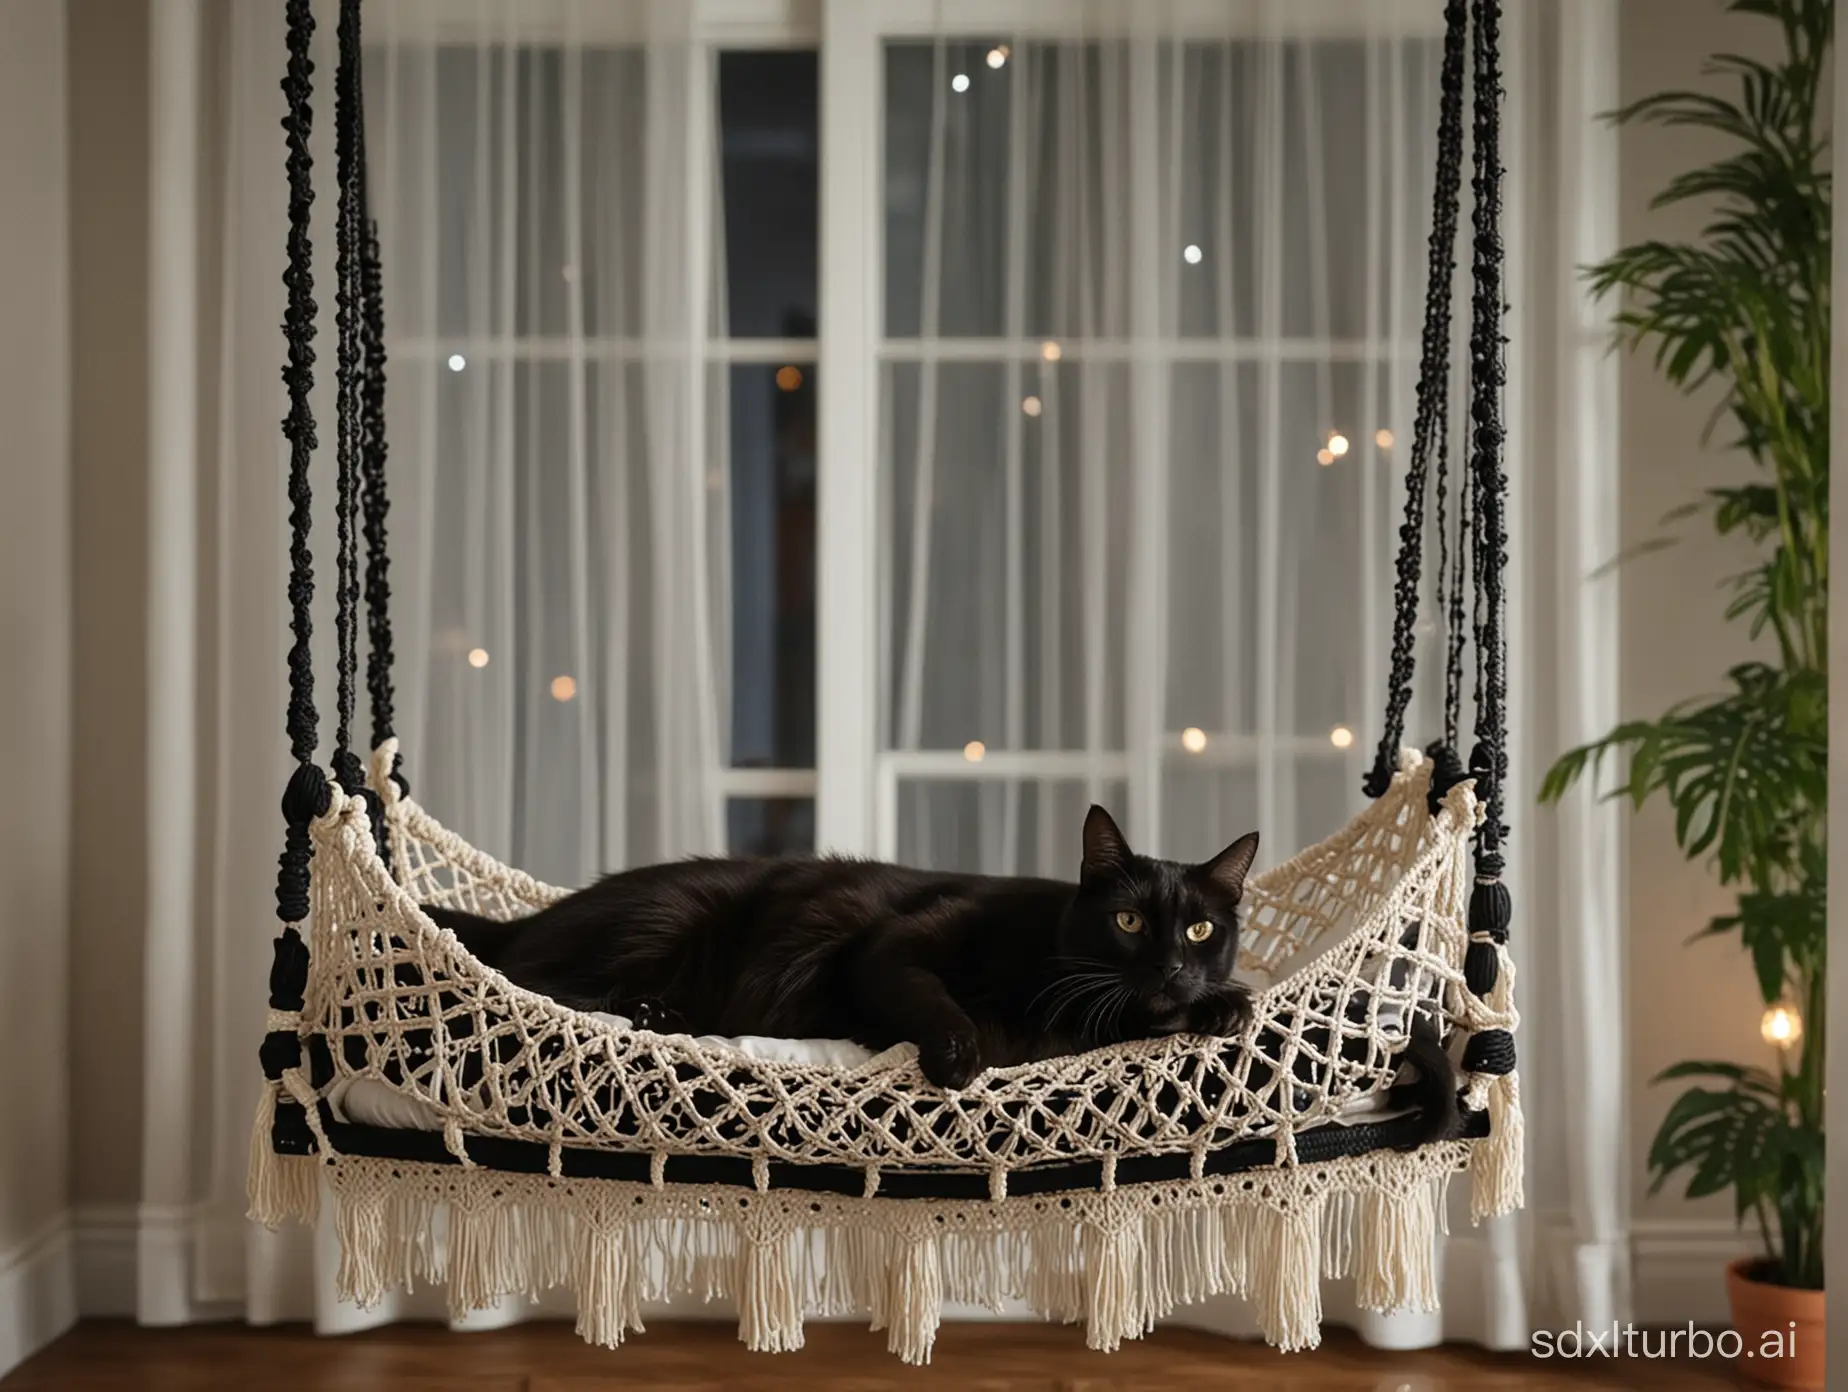 Black-Cat-Relaxing-on-Macrame-Hammock-by-Bedroom-Window-at-Night